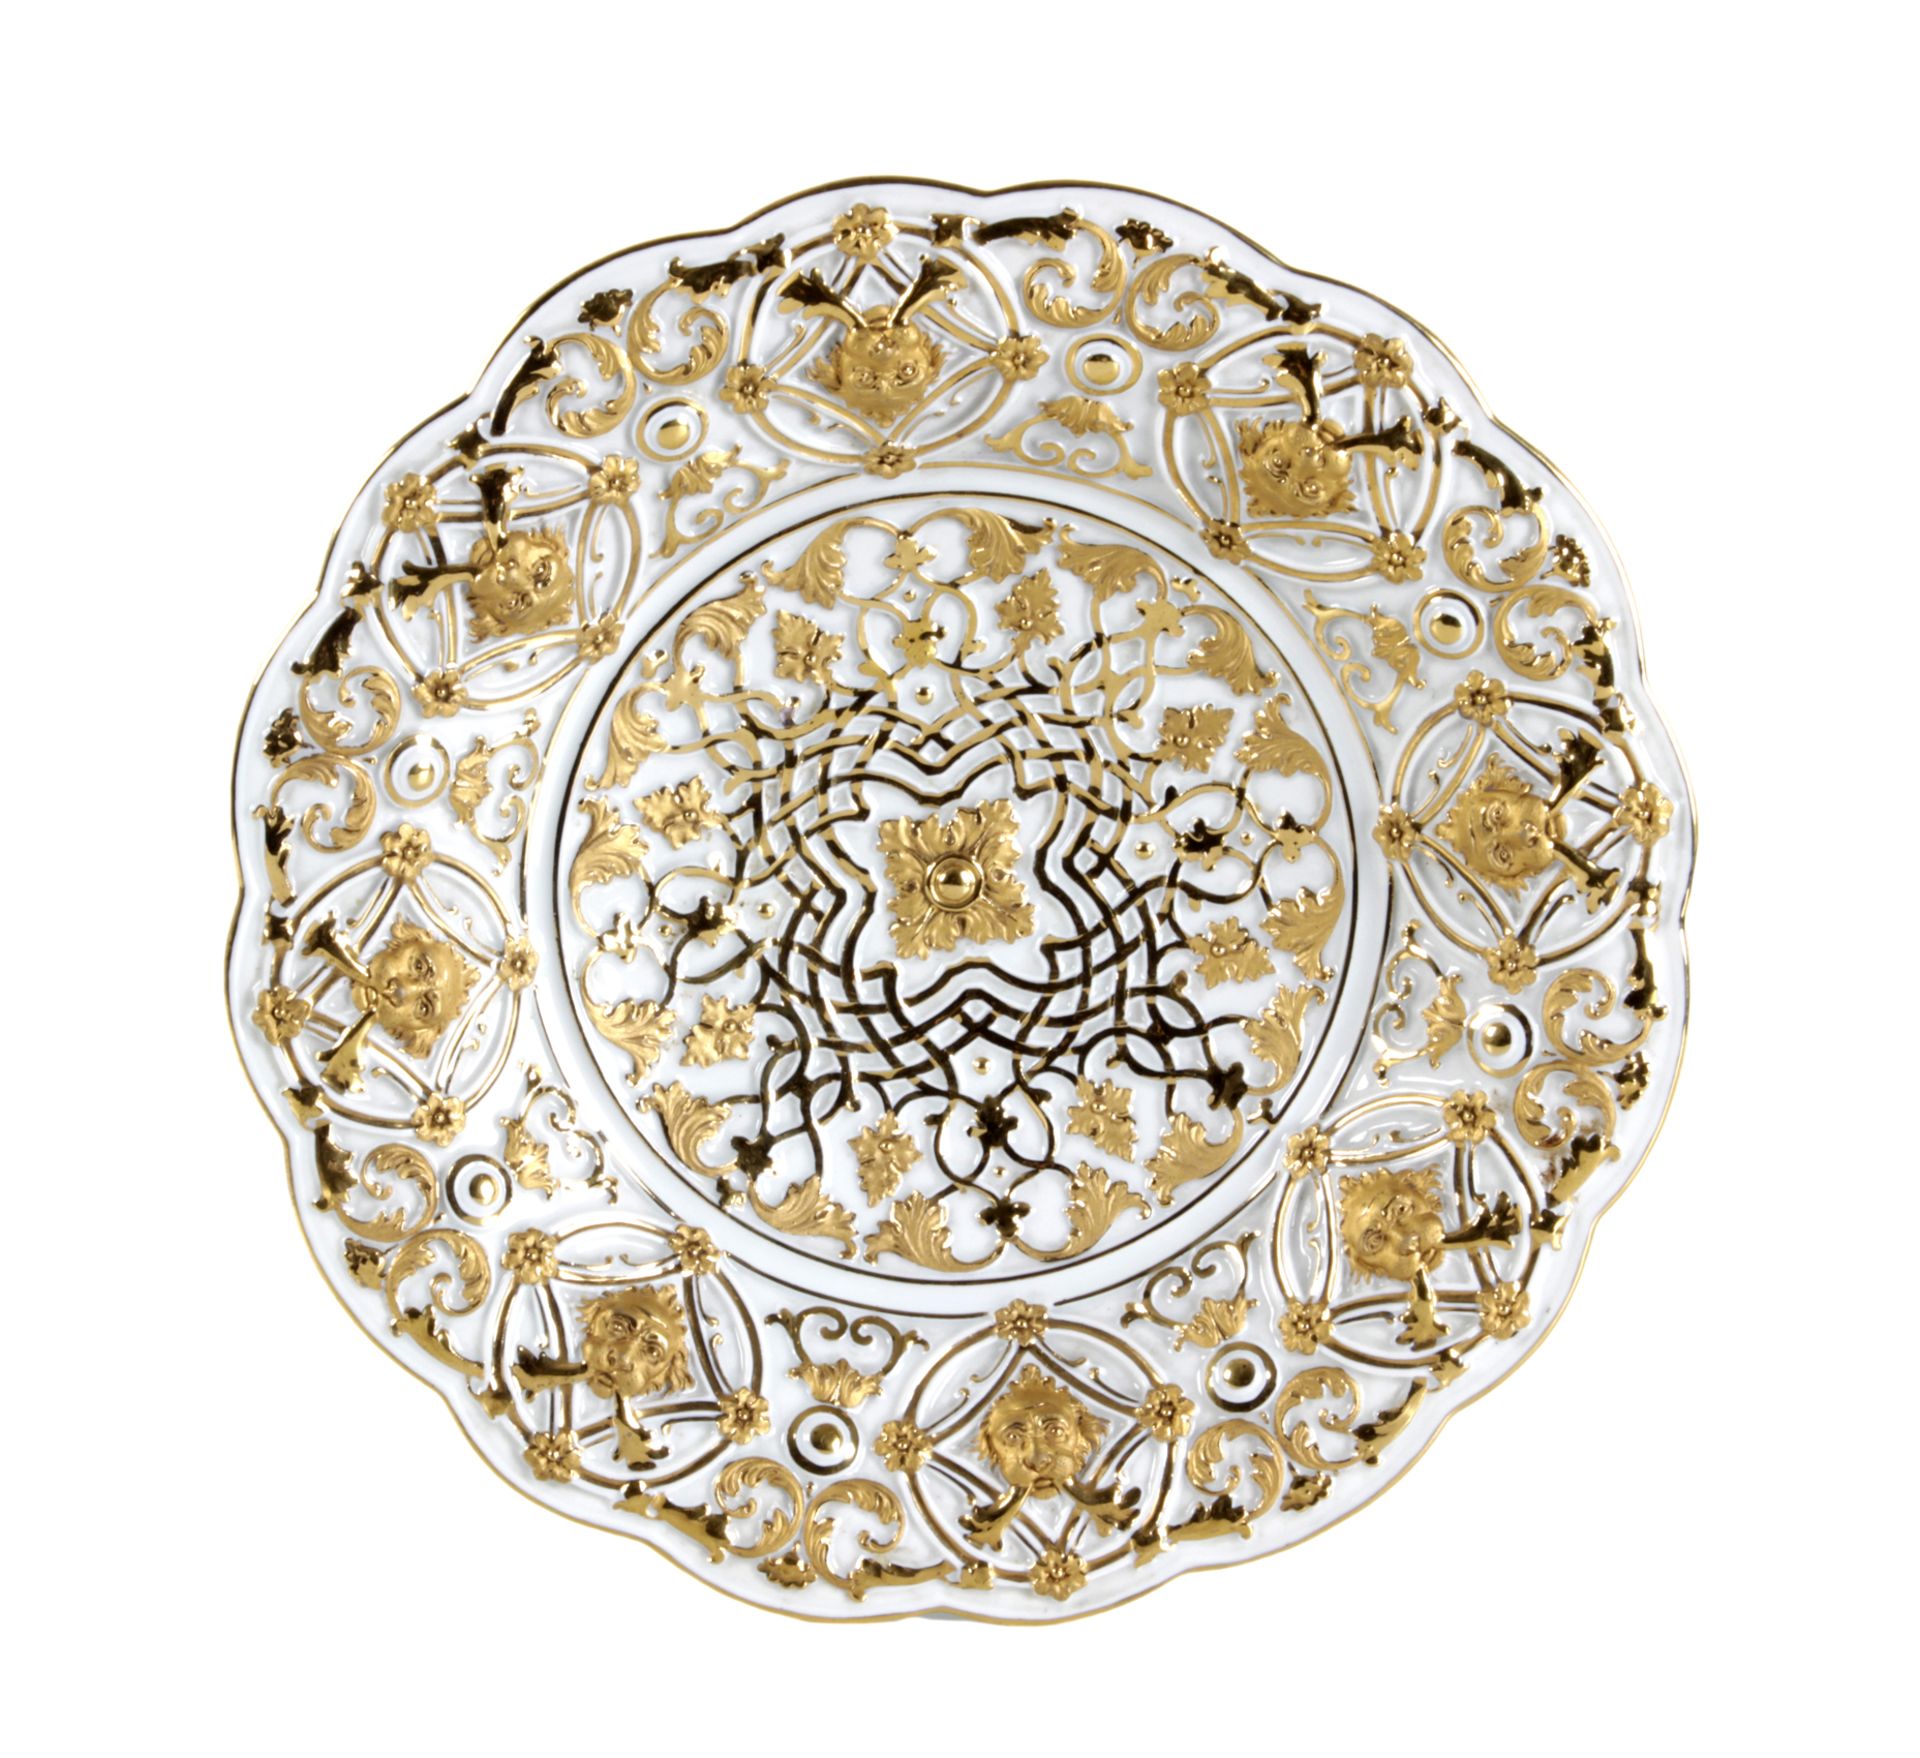 20th century decorative plate in Meissen porcelain